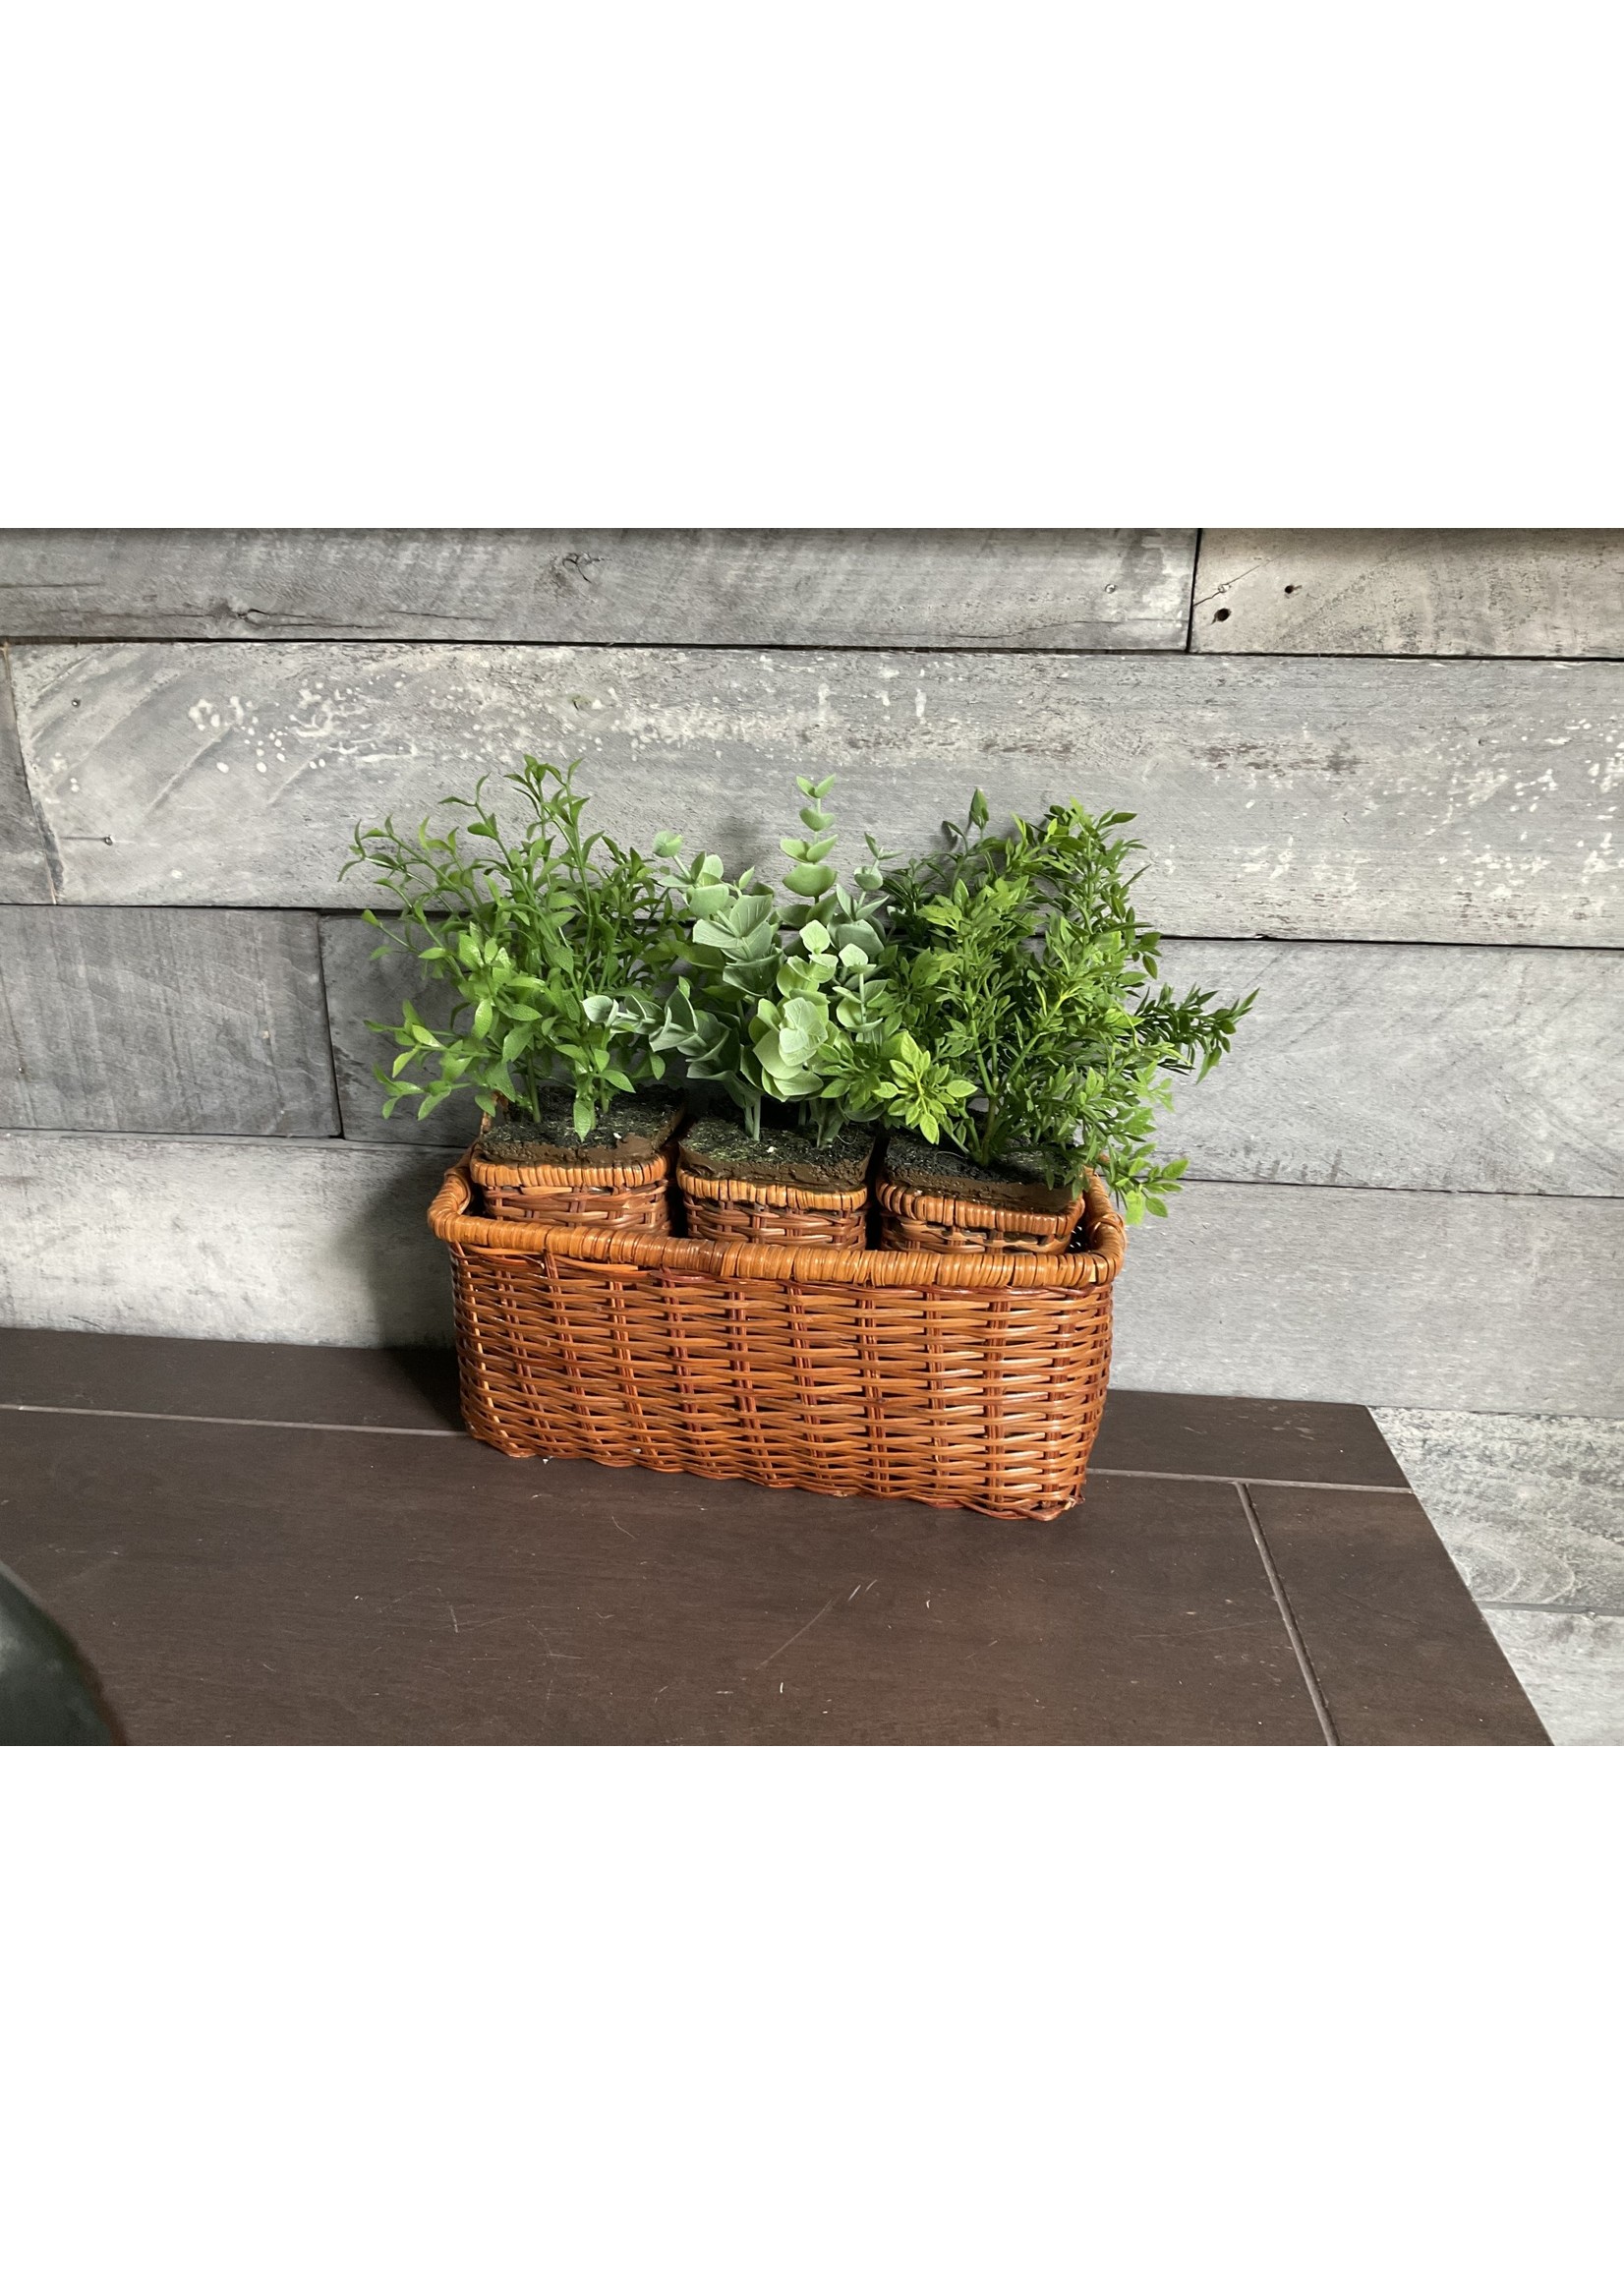 My New Favorite Thing Plants Wicker 3 Plant Basket